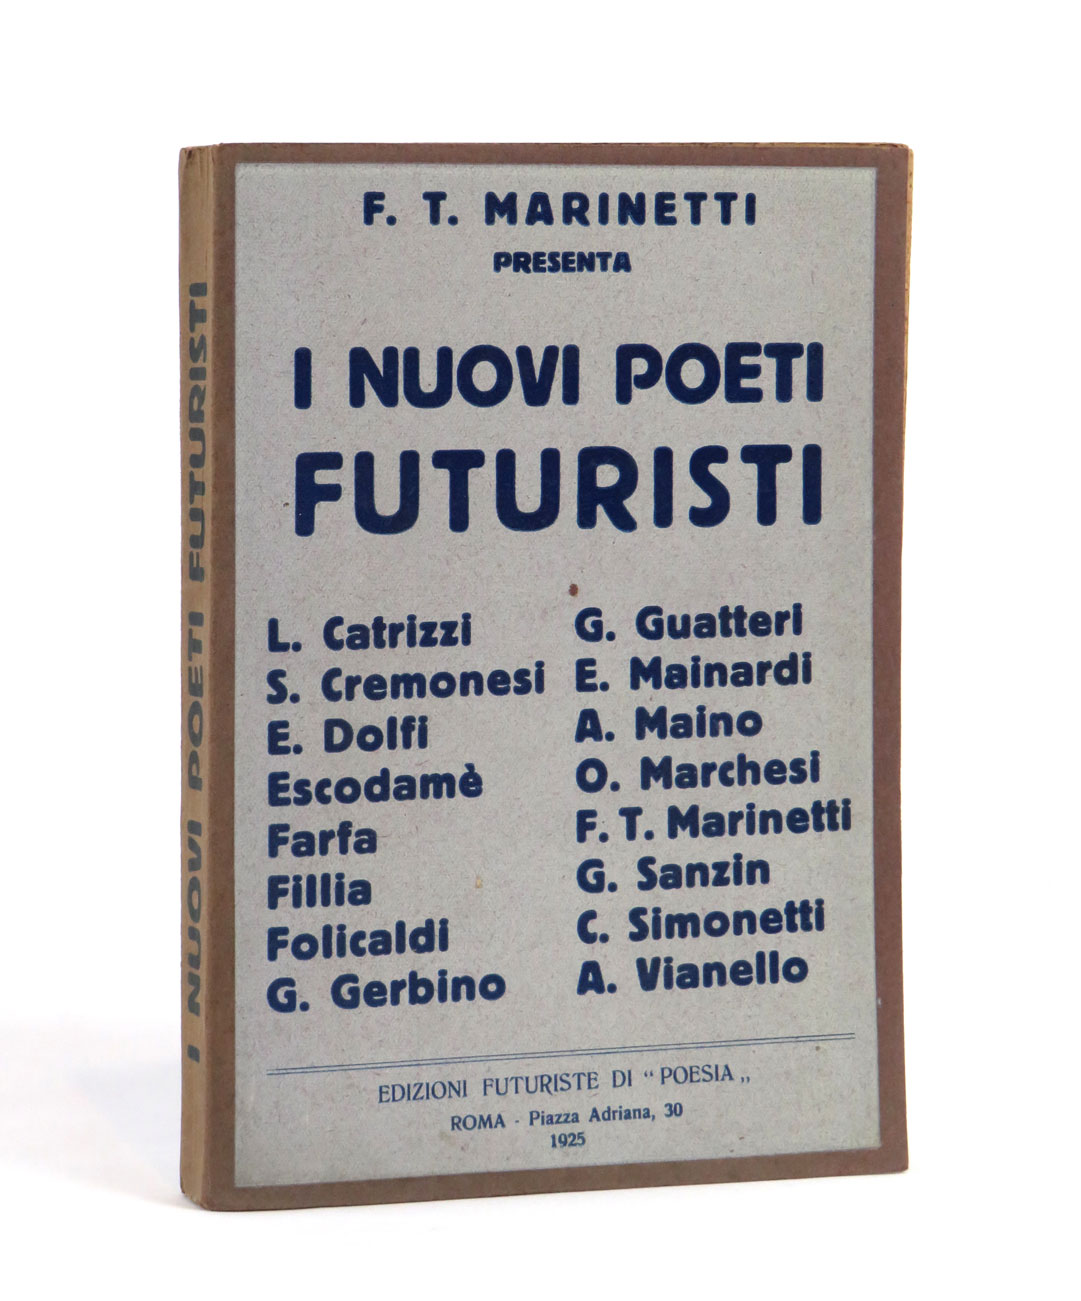 f.t. marinetti presenta i nuovi poeti futuristi